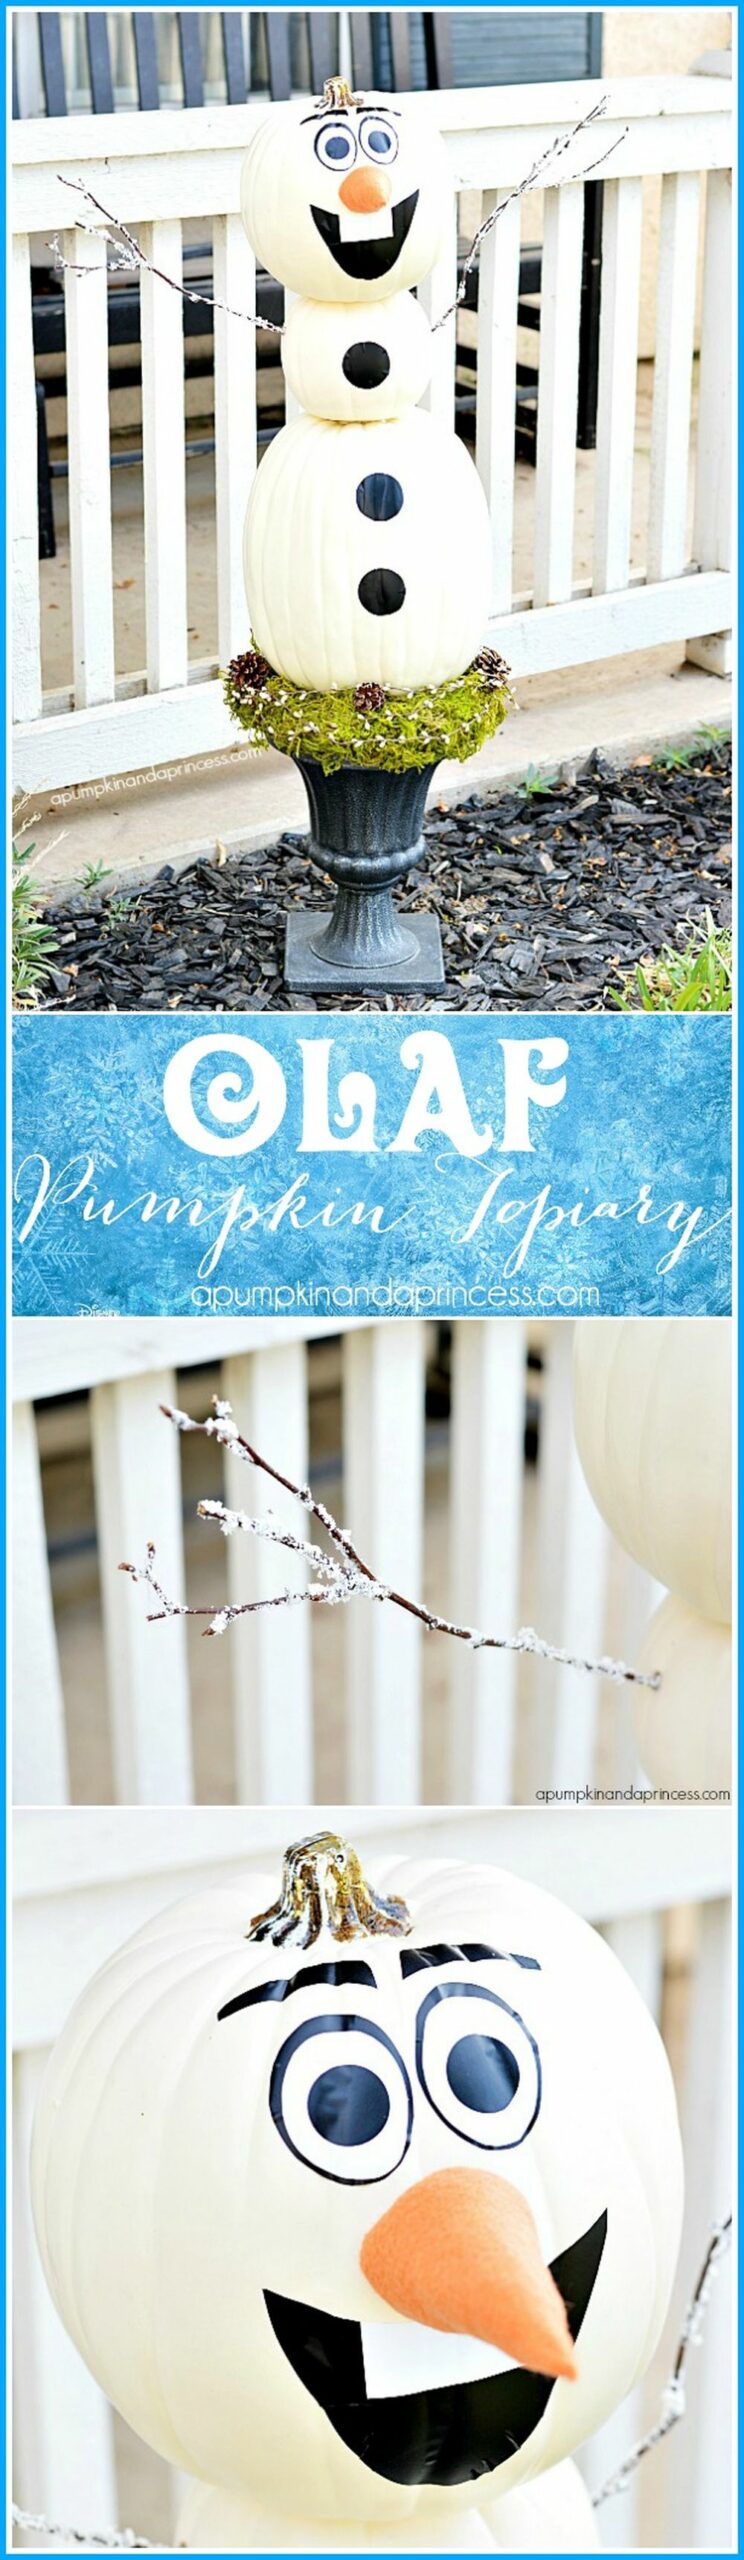 Olaf pumpkin topiary disney outdoor christmas decorations 